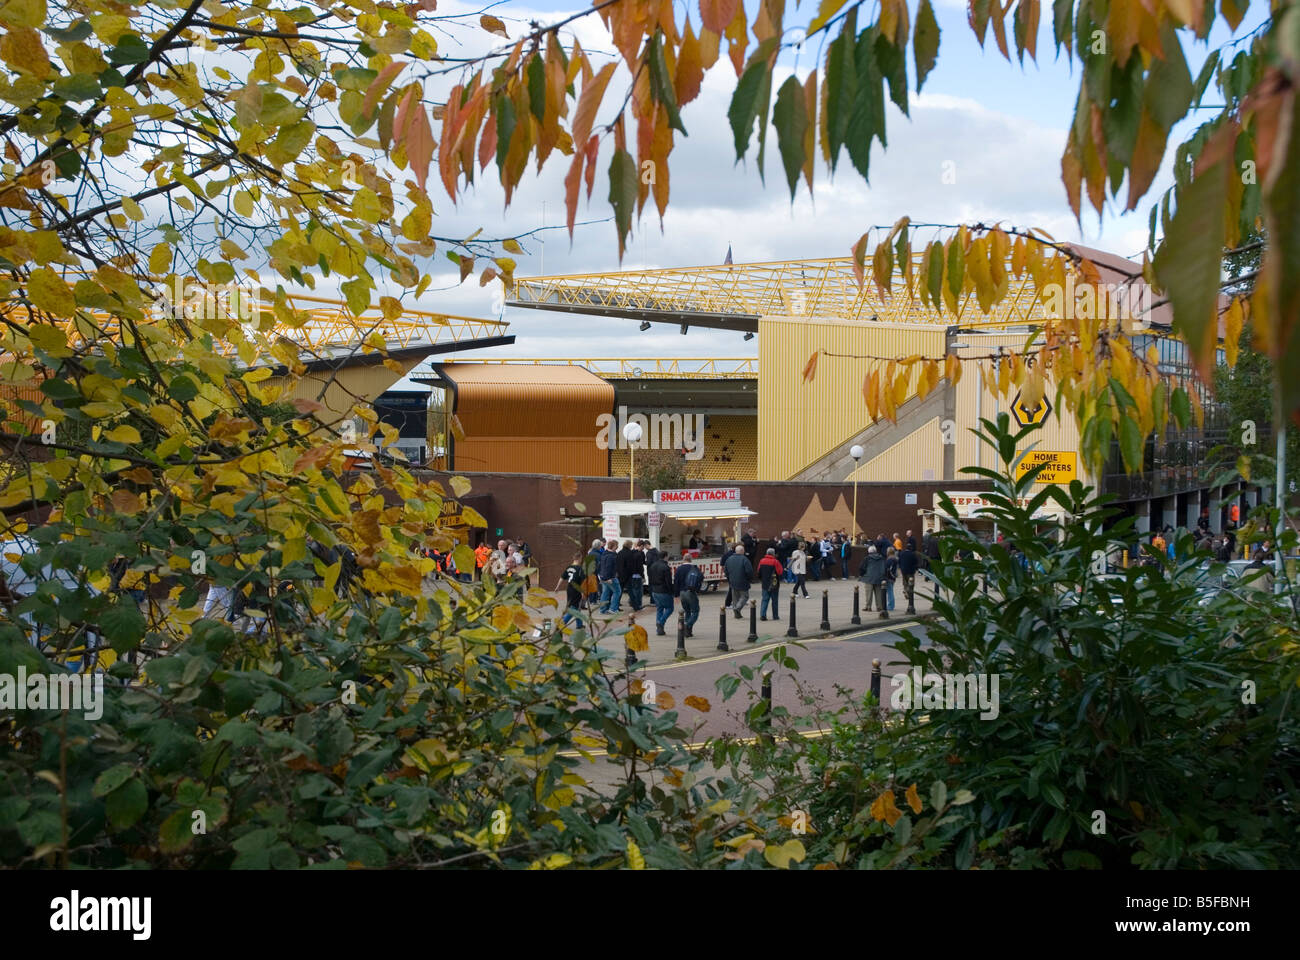 Molineux Stadium home of Wolverhampton Wanders Football Club Stock Photo